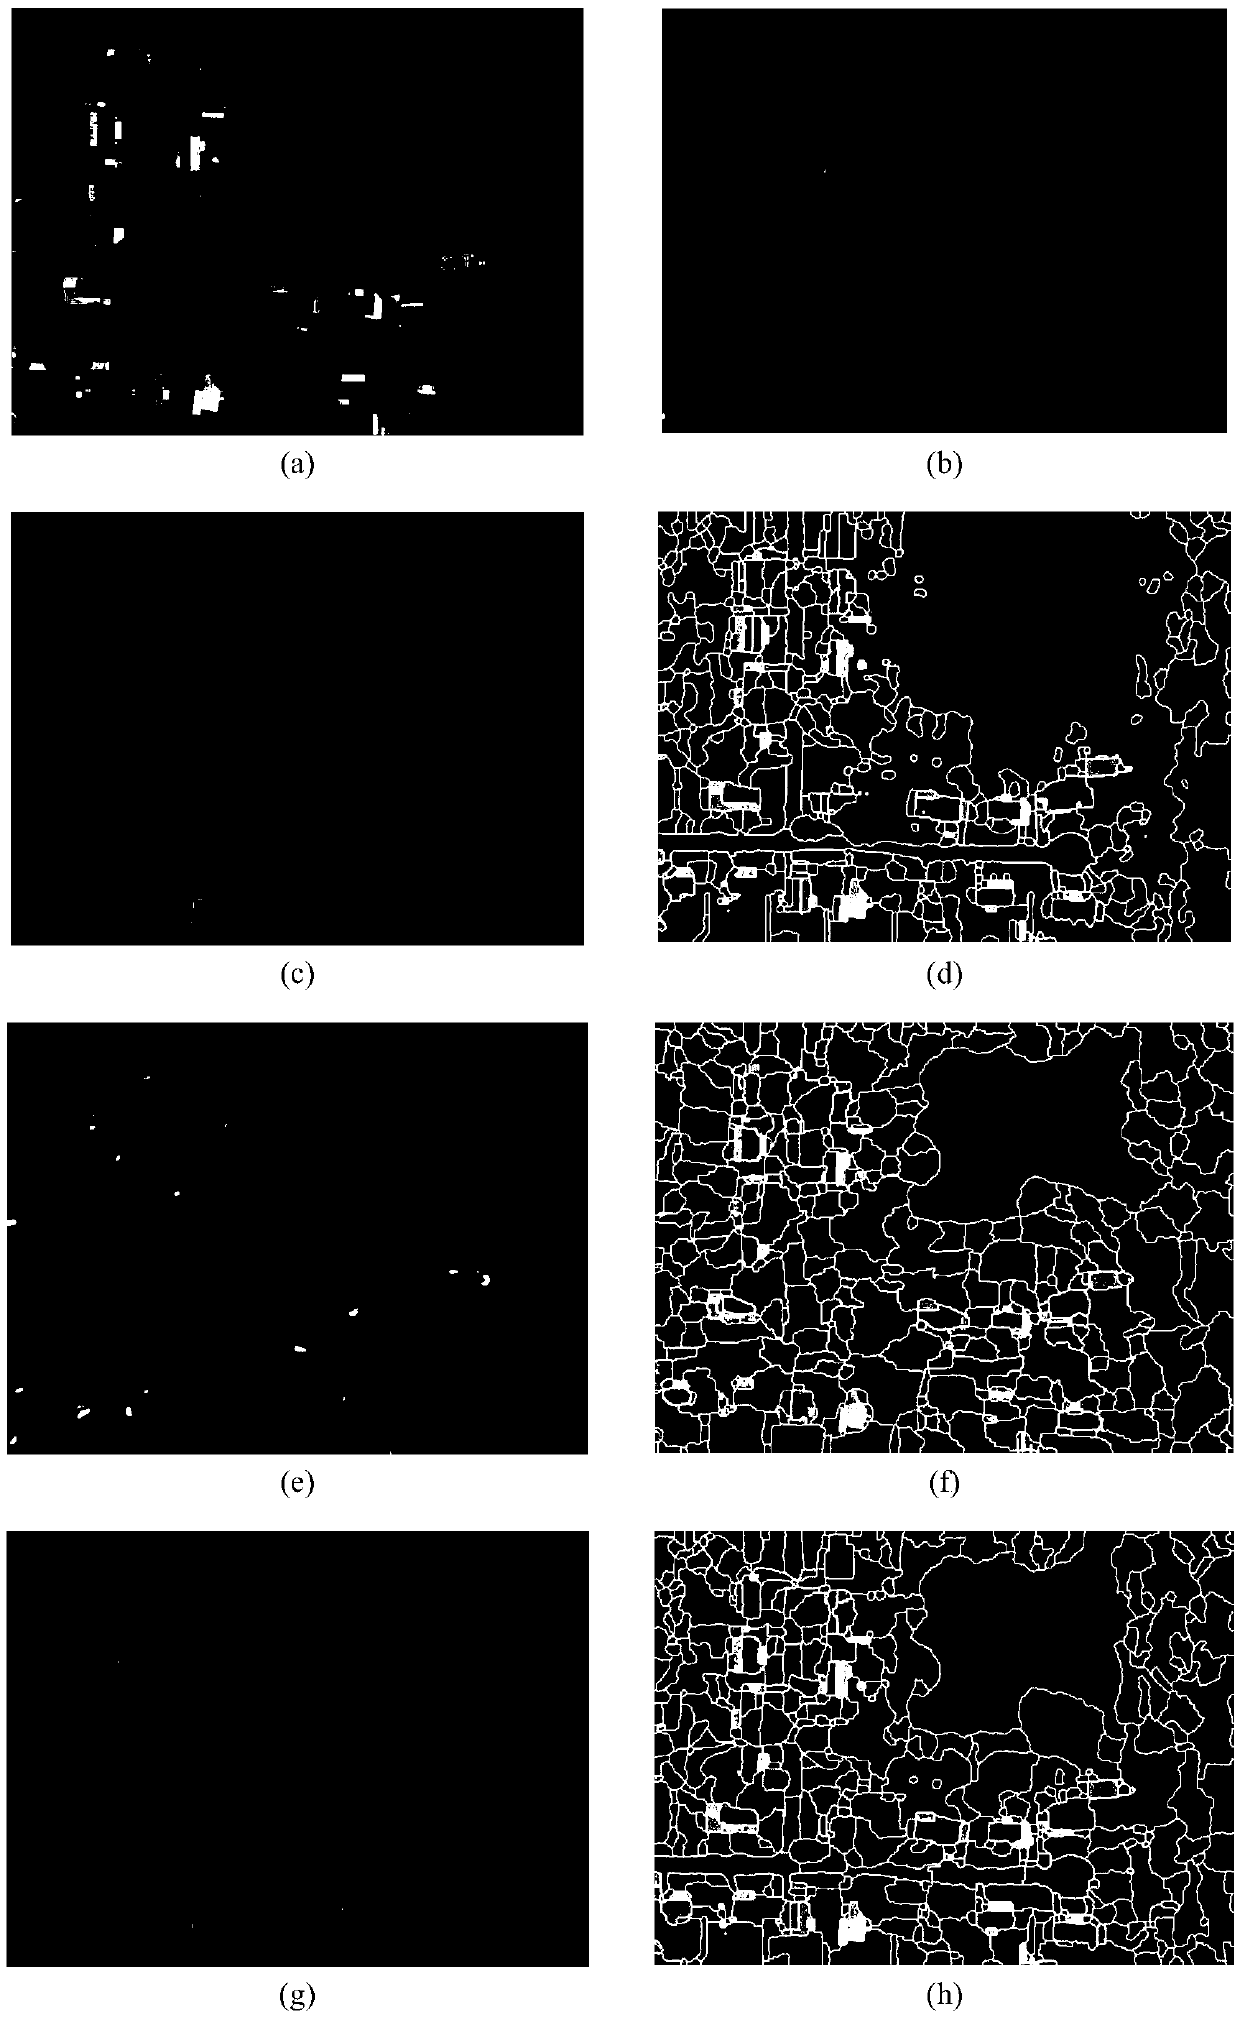 Visual perception enlightening high-resolution remote-sensing image segmentation method